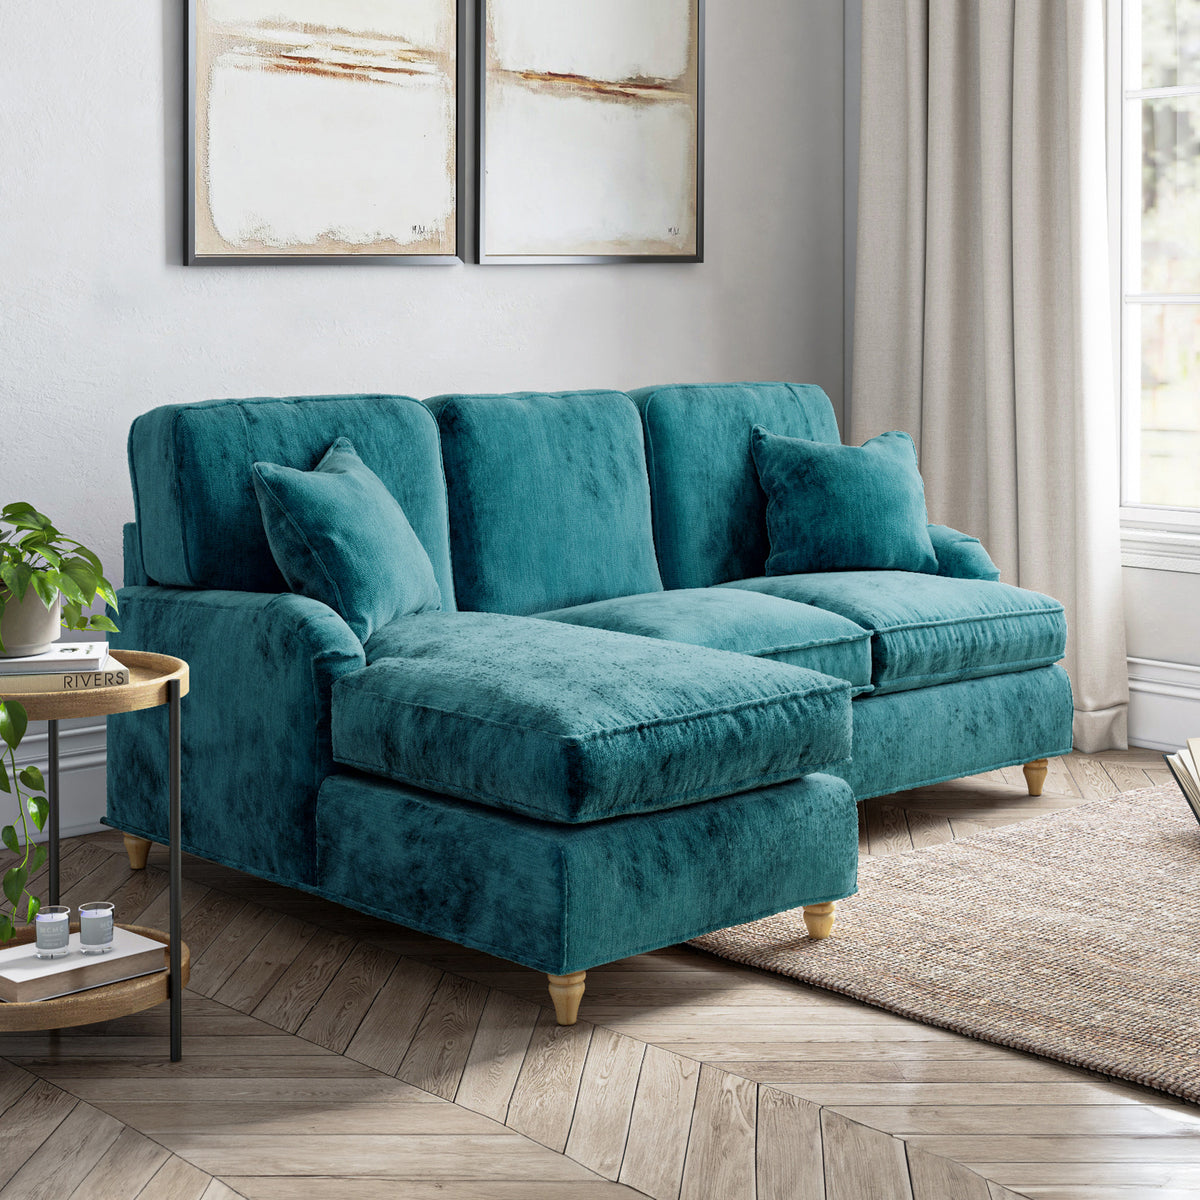 Arthur Emerald Green LH Chaise Sofa from Roseland Furniture